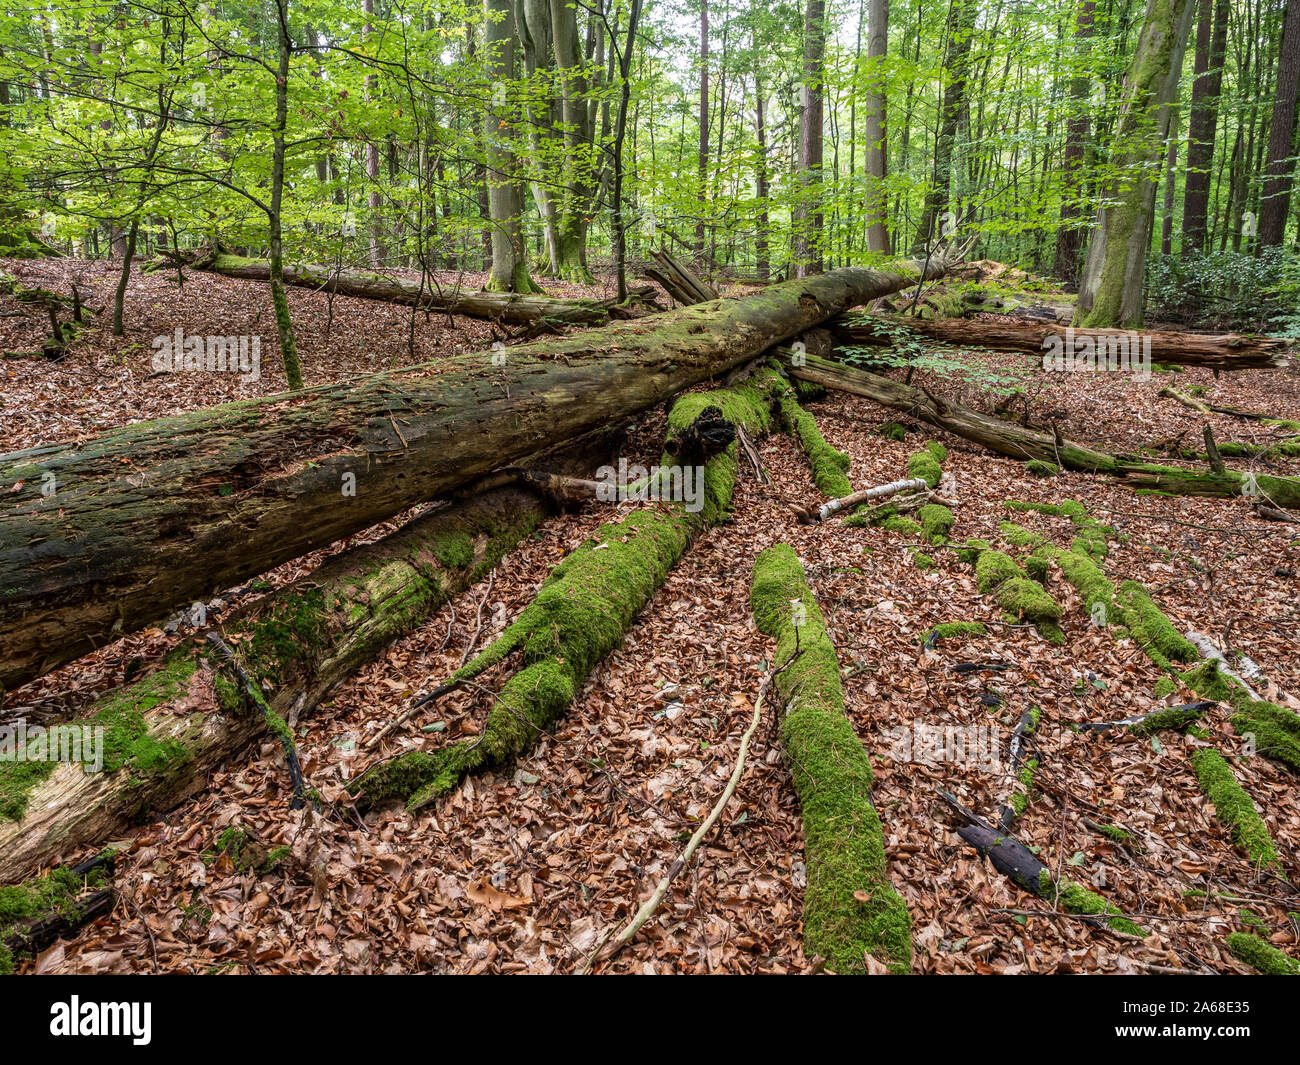 European beech tree (Fagus ). in woodland, Serrahn, Muritz-National Park, World Natural Heritage site, Germany, Stock Photo